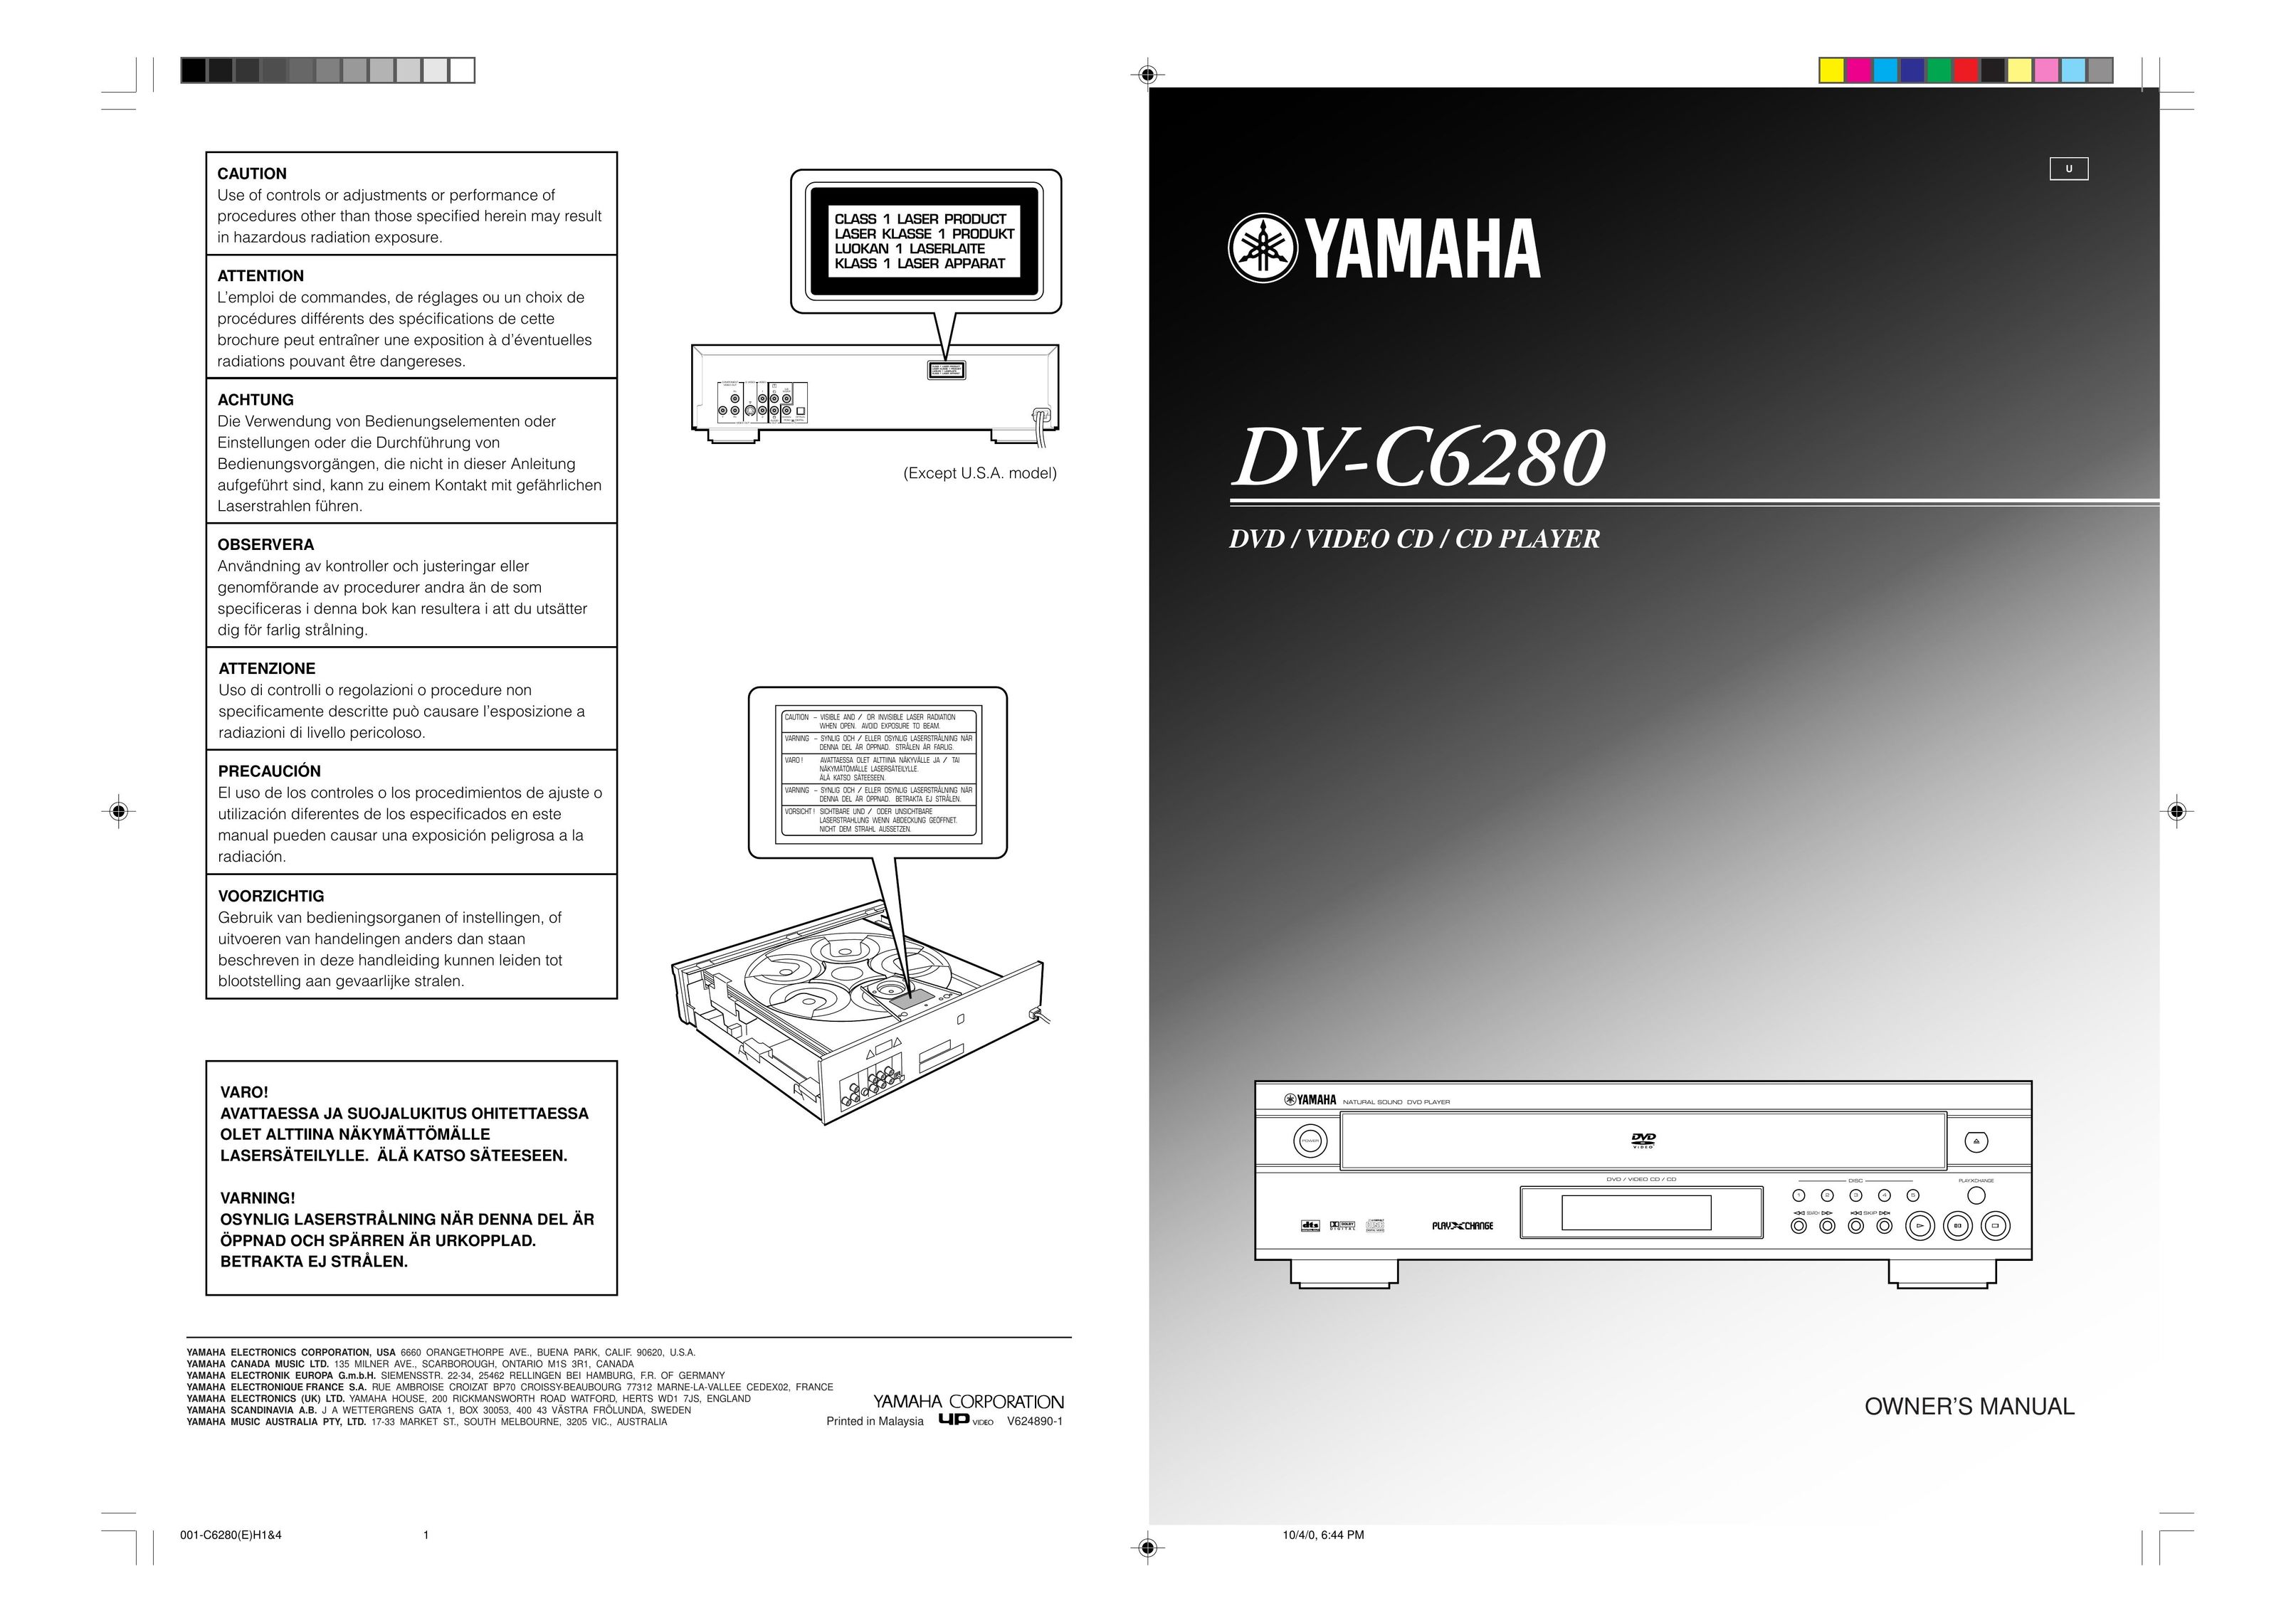 Yamaha DV-C6280 DVD Player User Manual